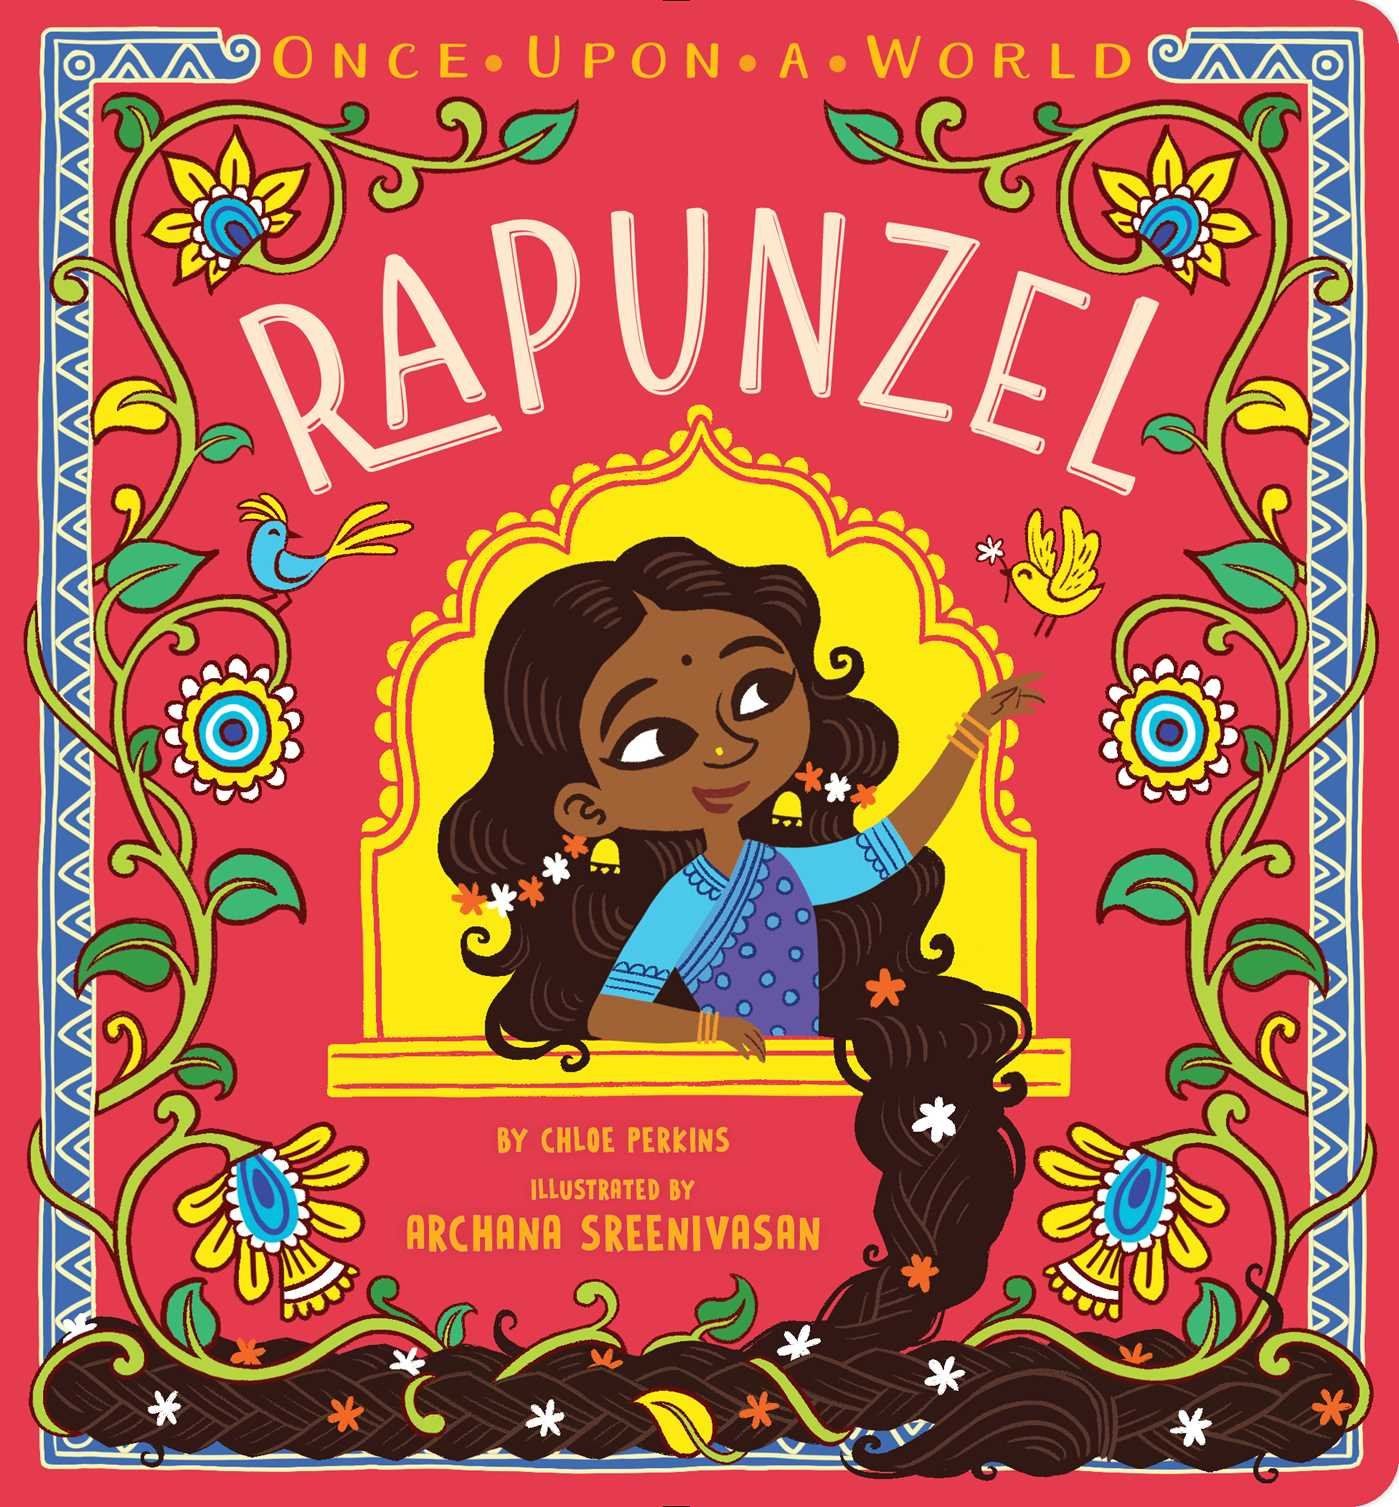 Rapunzel by Chloe Perkins and Archana Sreenivasan cover